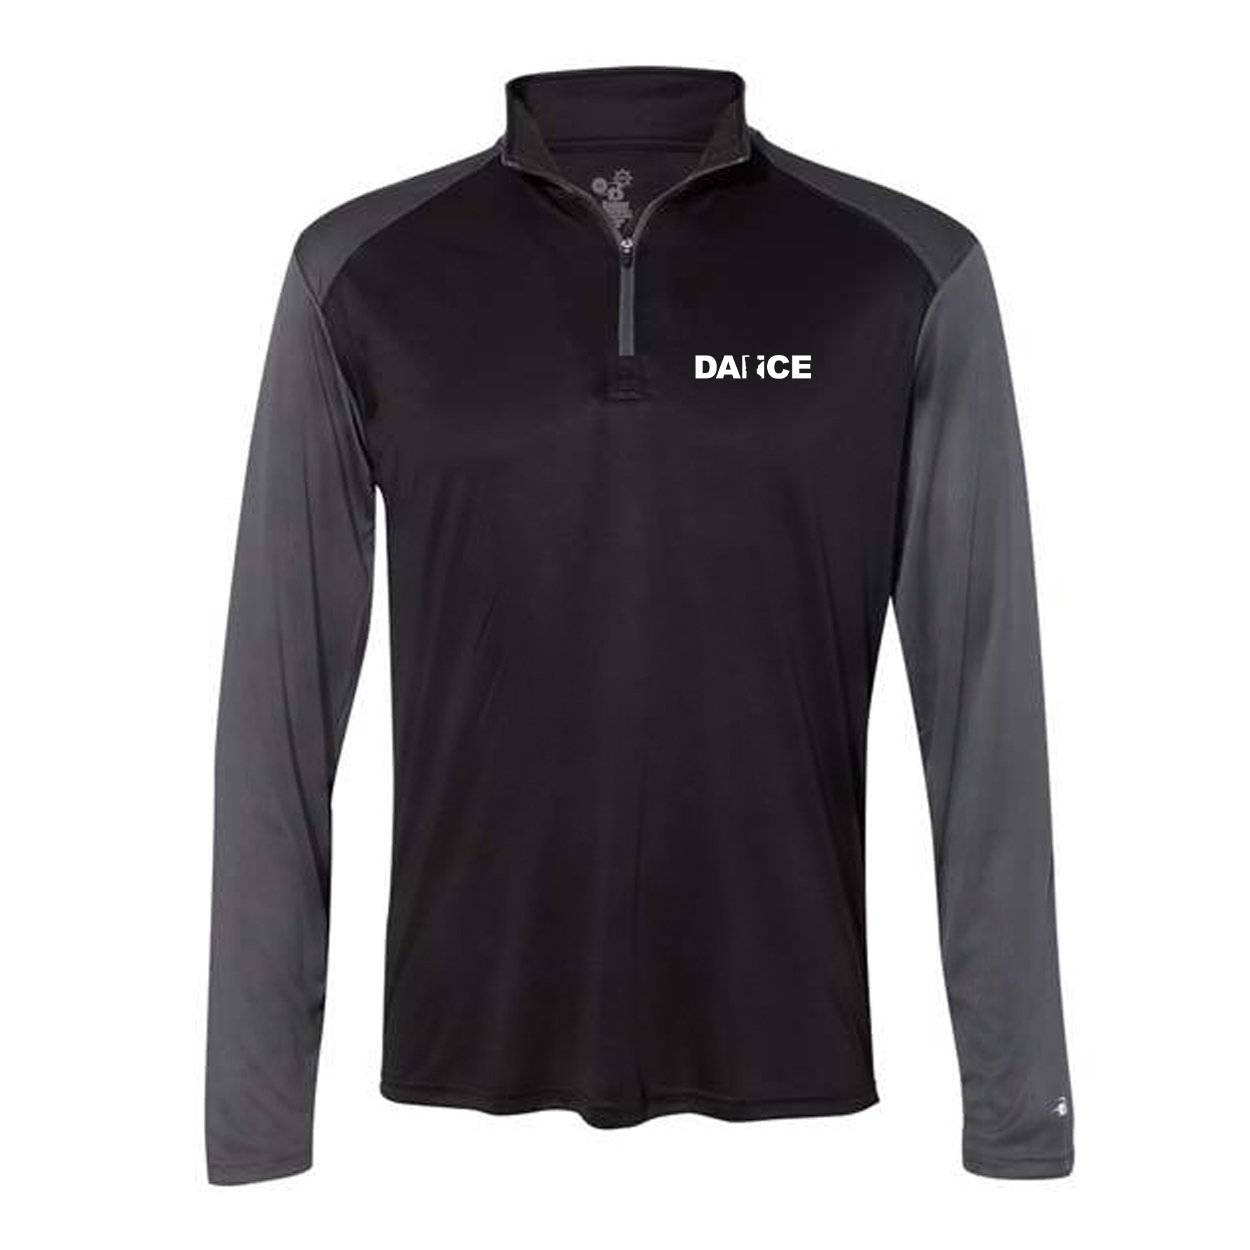 Dance Minnesota Night Out Unisex Premium Quarter-Zip Pullover Long Sleeve Shirt Black/Graphite (White Logo)